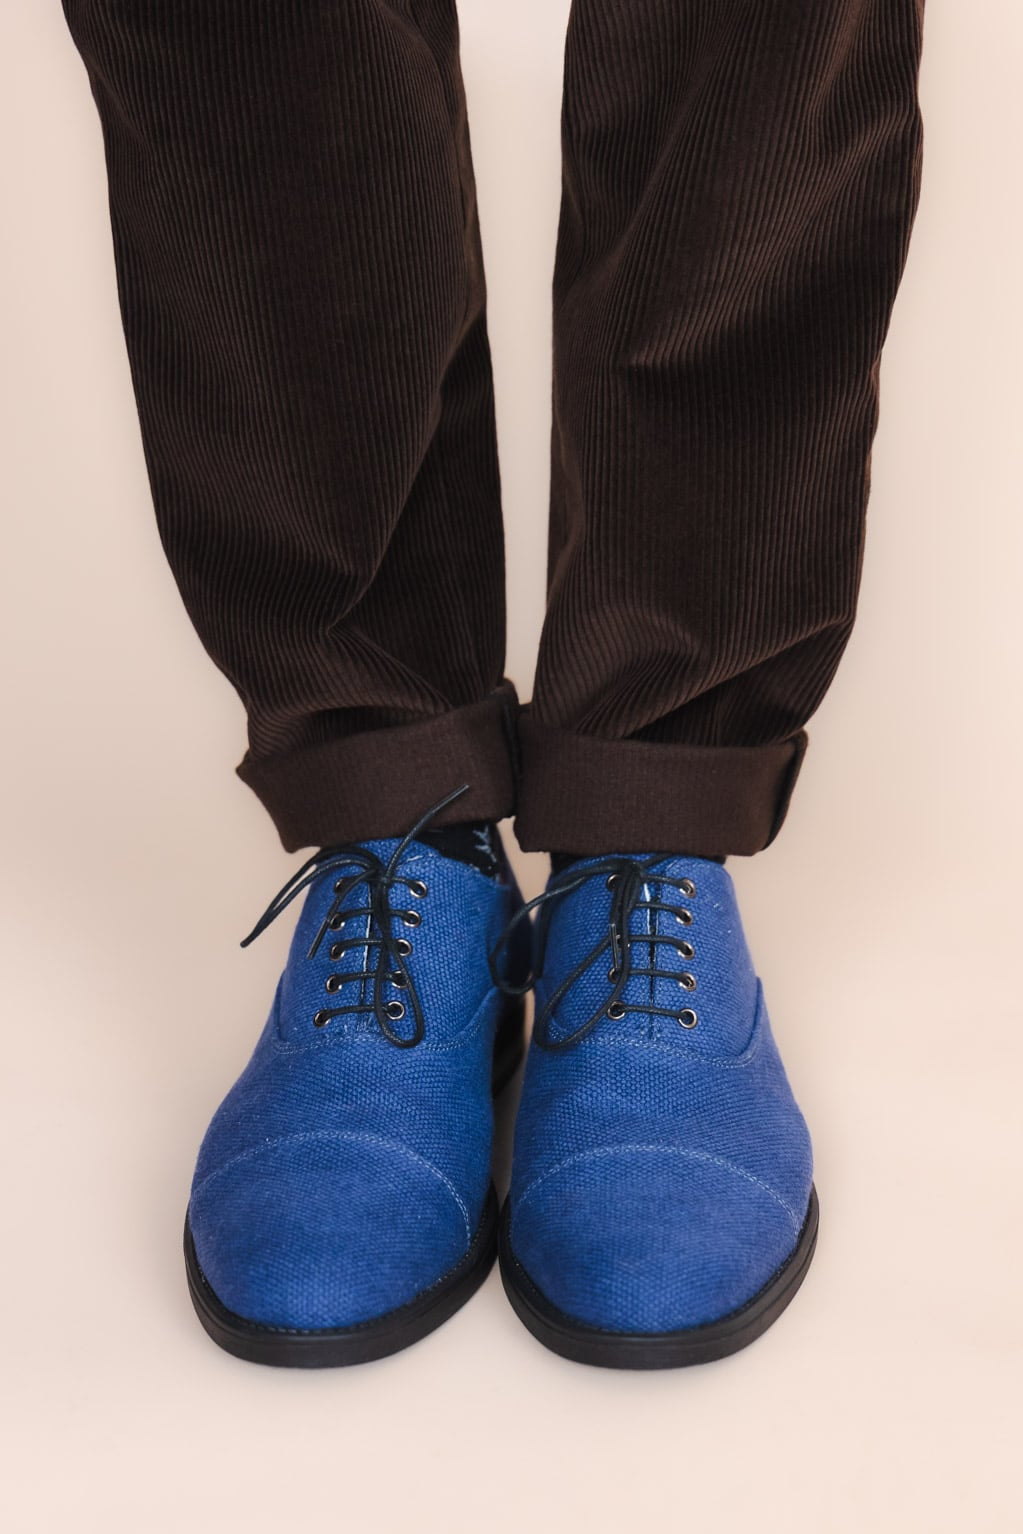 Pantofii "Dunarea" de Canepa - Albastru